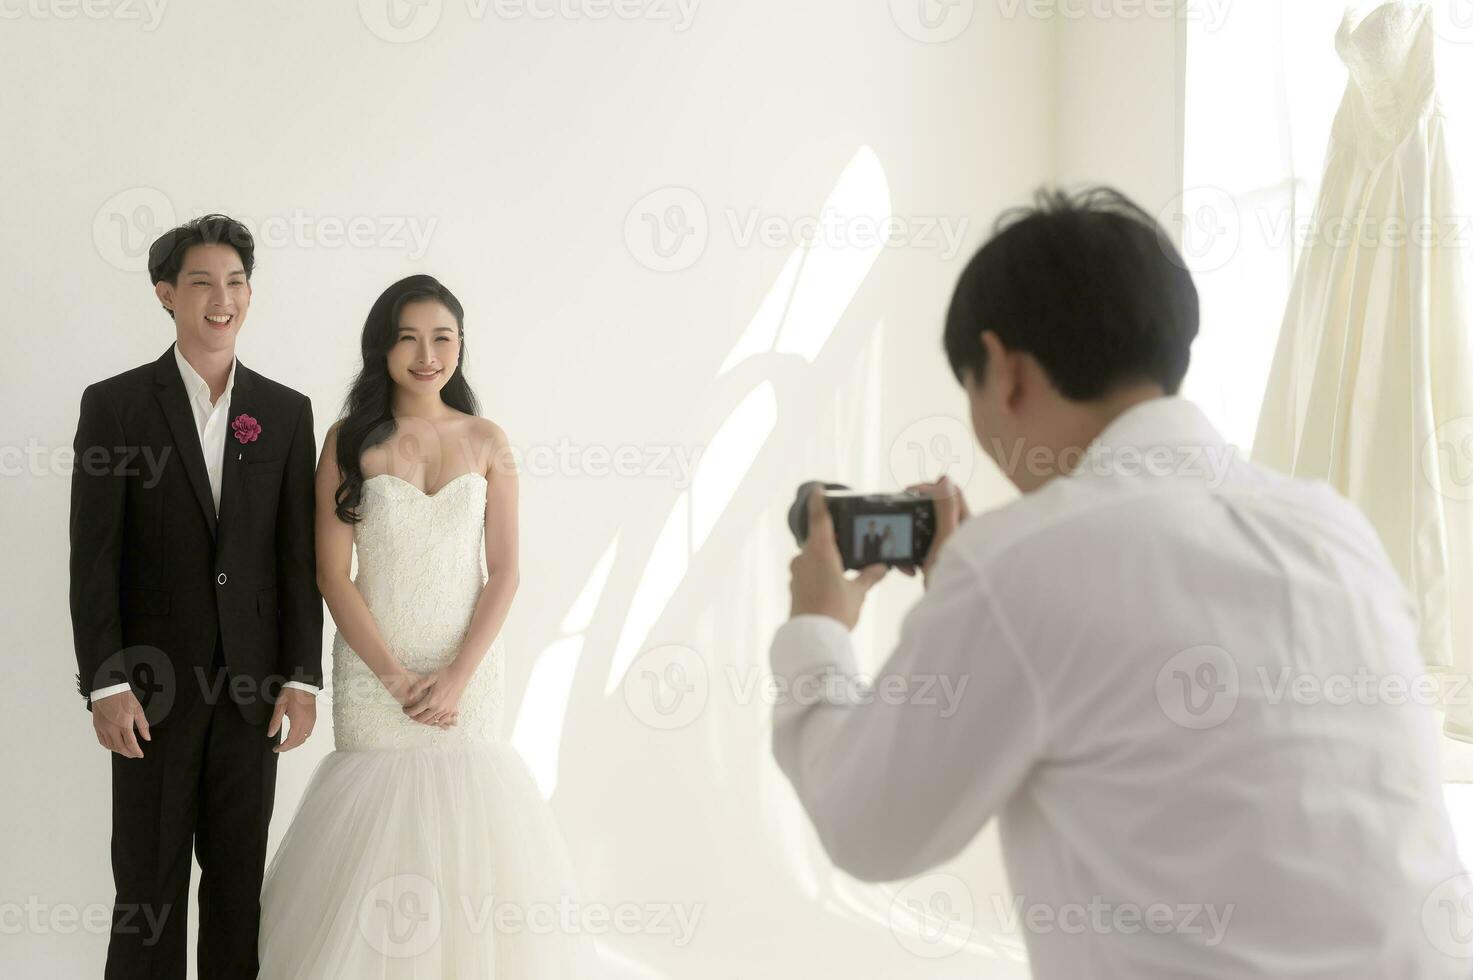 fotógrafo levando As fotos do noiva e noivo dentro Casamento cerimônia, amor ,romântico e Casamento proposta conceito.